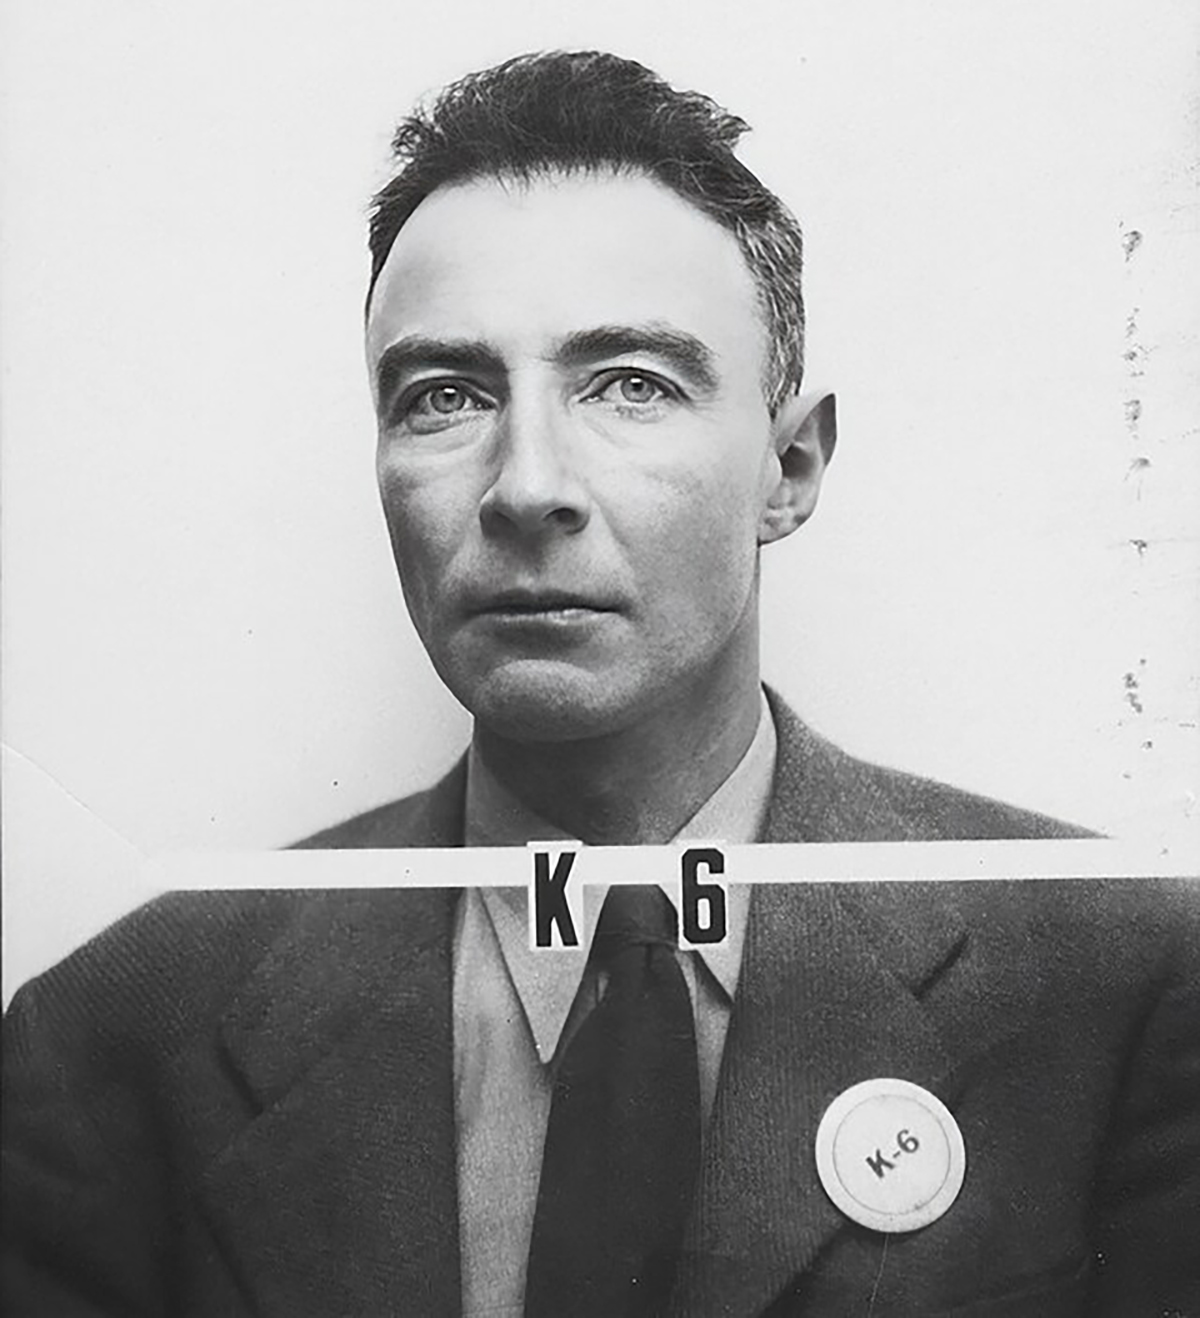 J. Robert Oppenheimer's Los Alamos ID badge, 1943 (Wikimedia Commons)